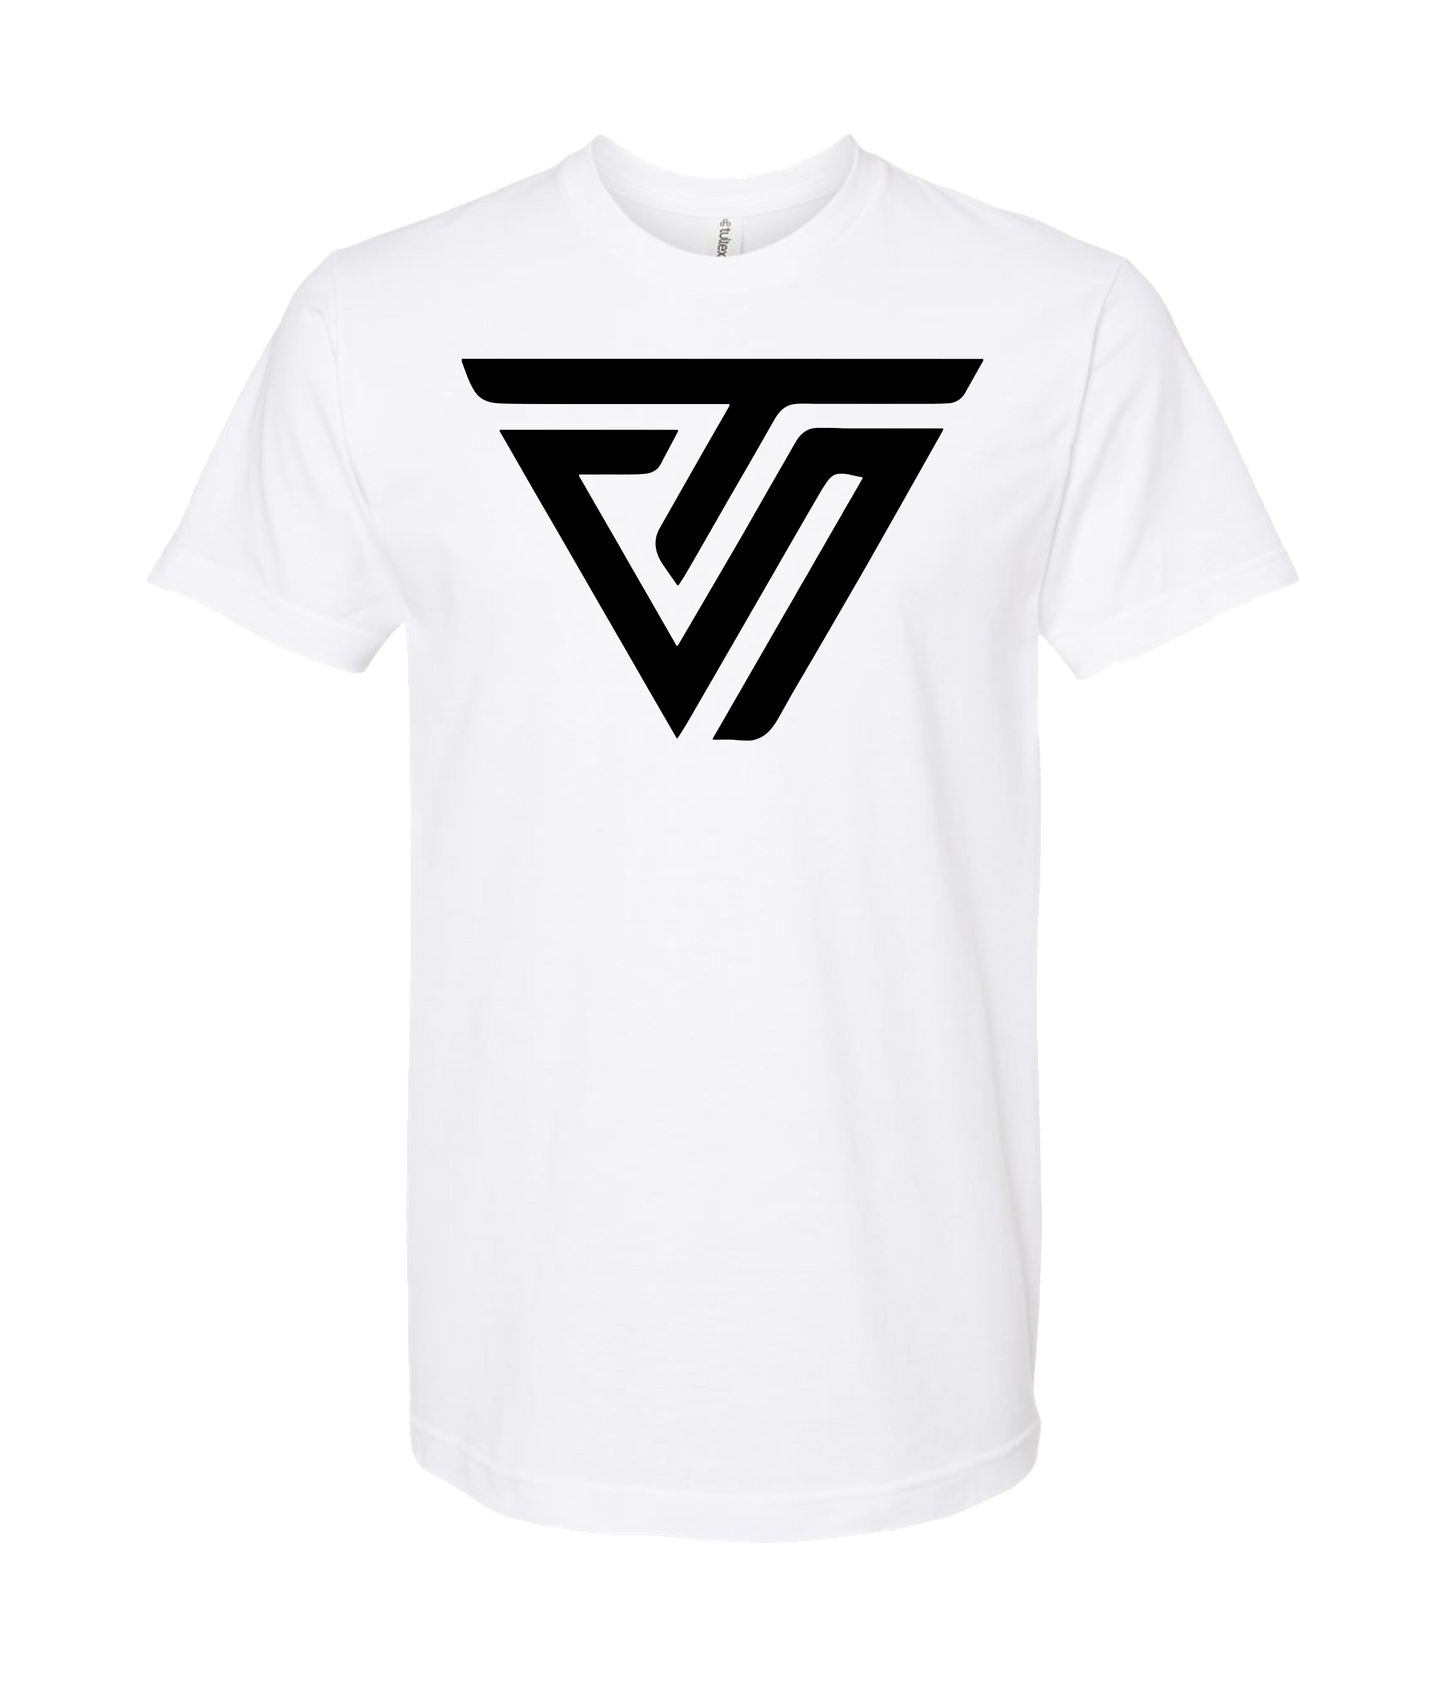 TheShift - The Triangle - White T Shirt